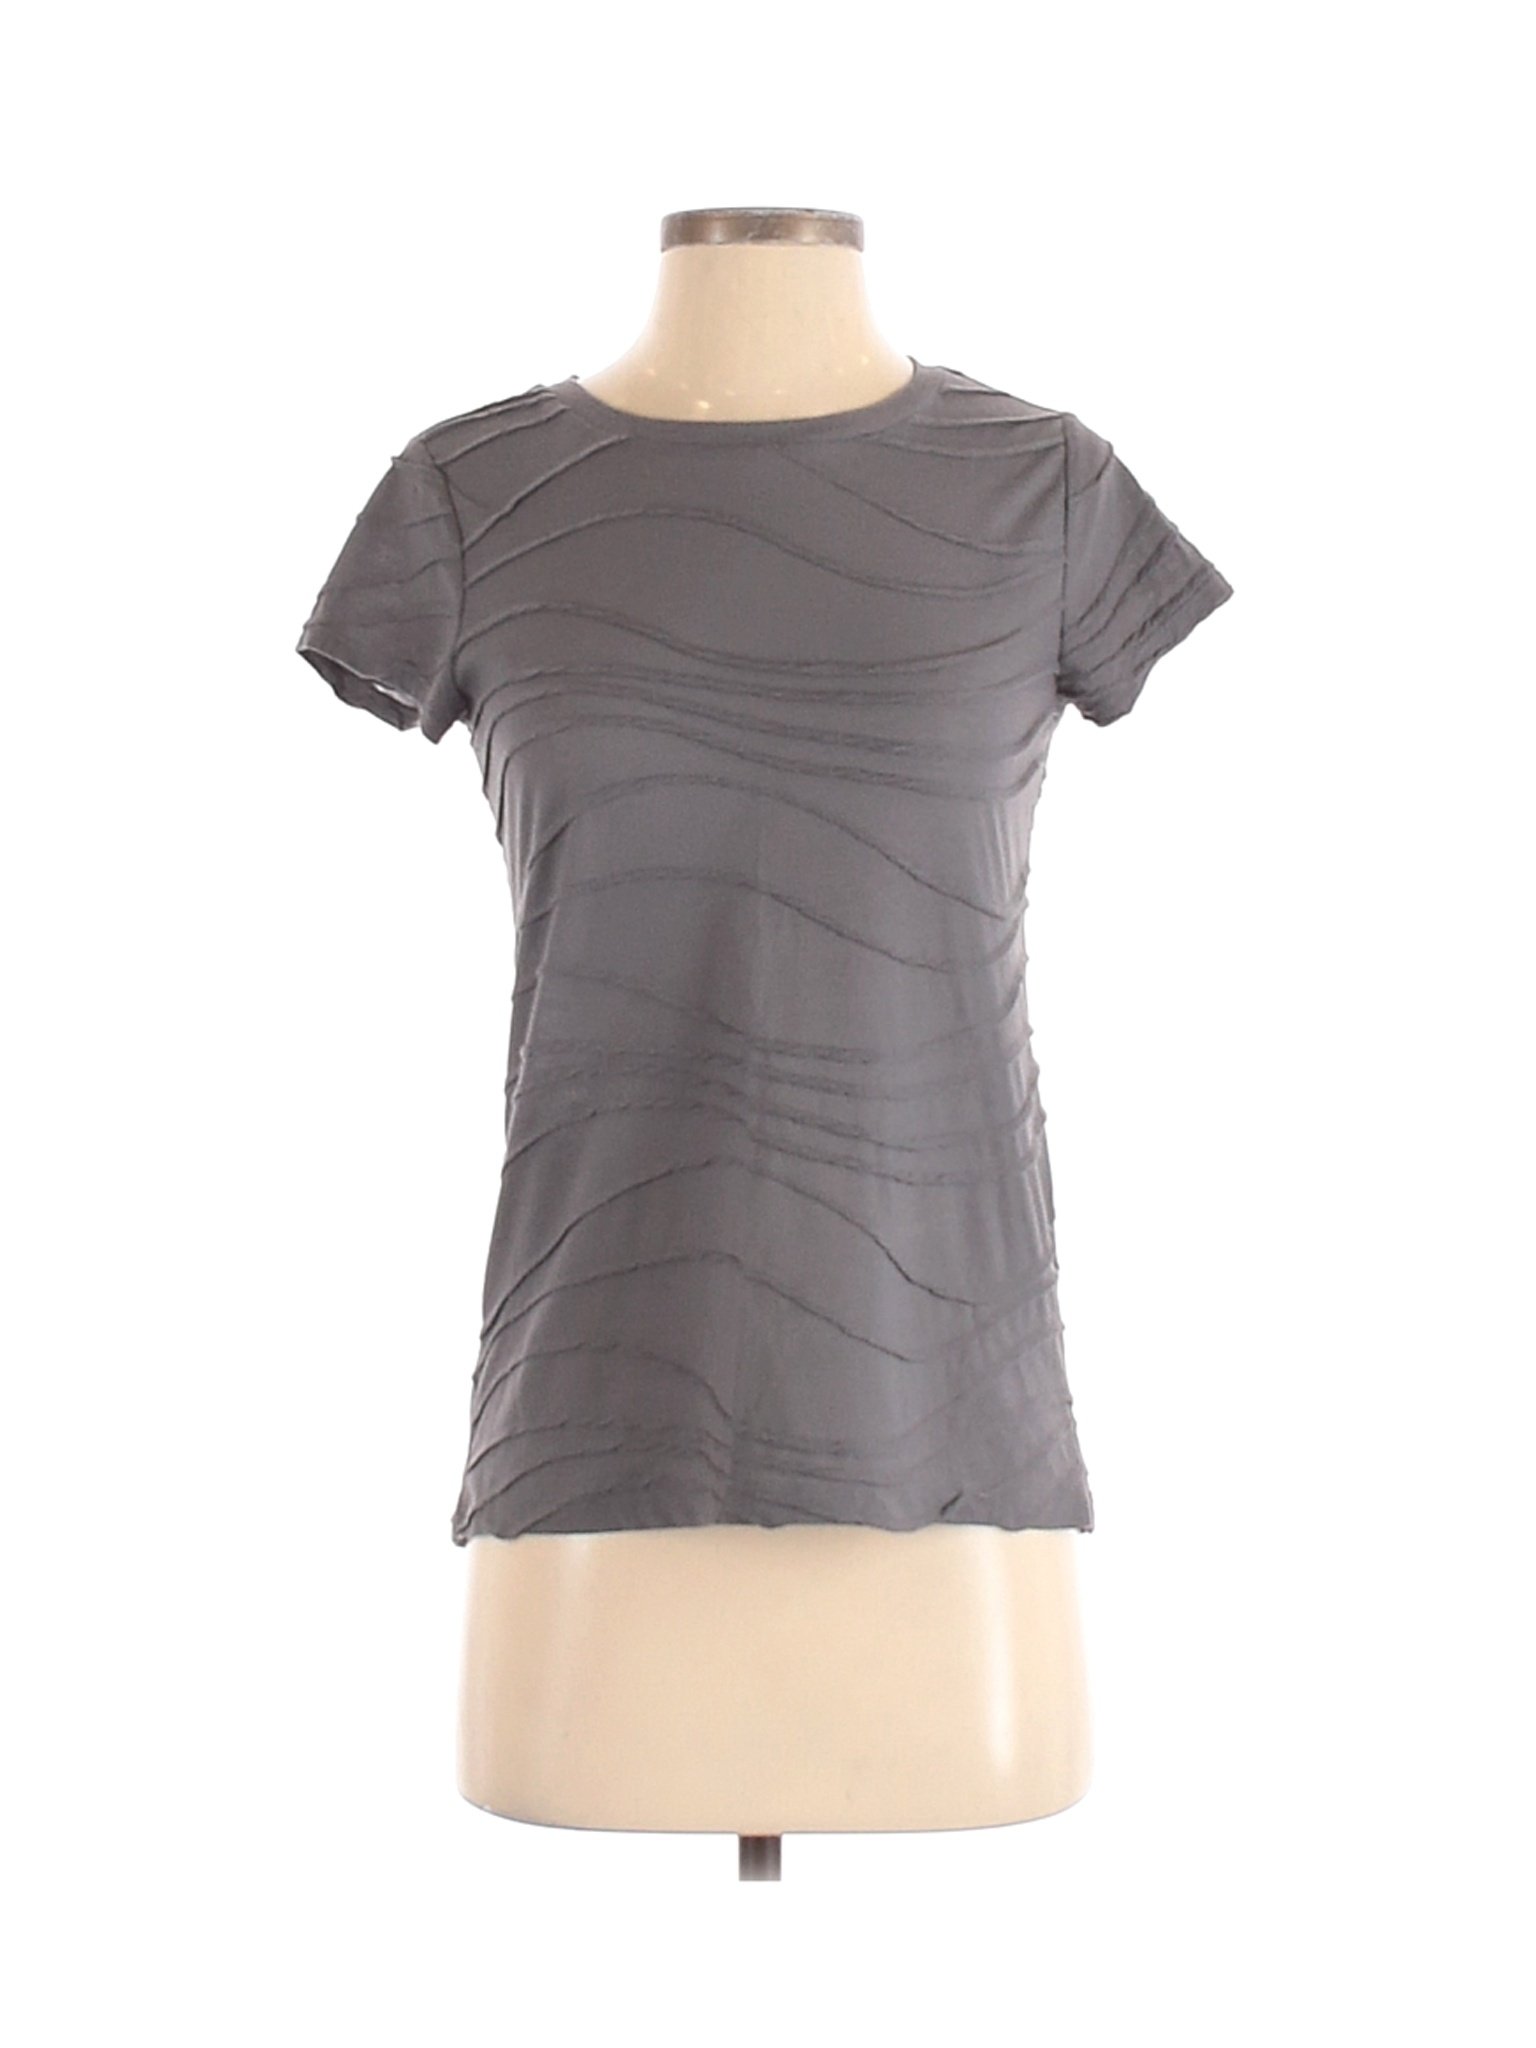 Simply Vera Vera Wang Women Gray Short Sleeve Top XS | eBay